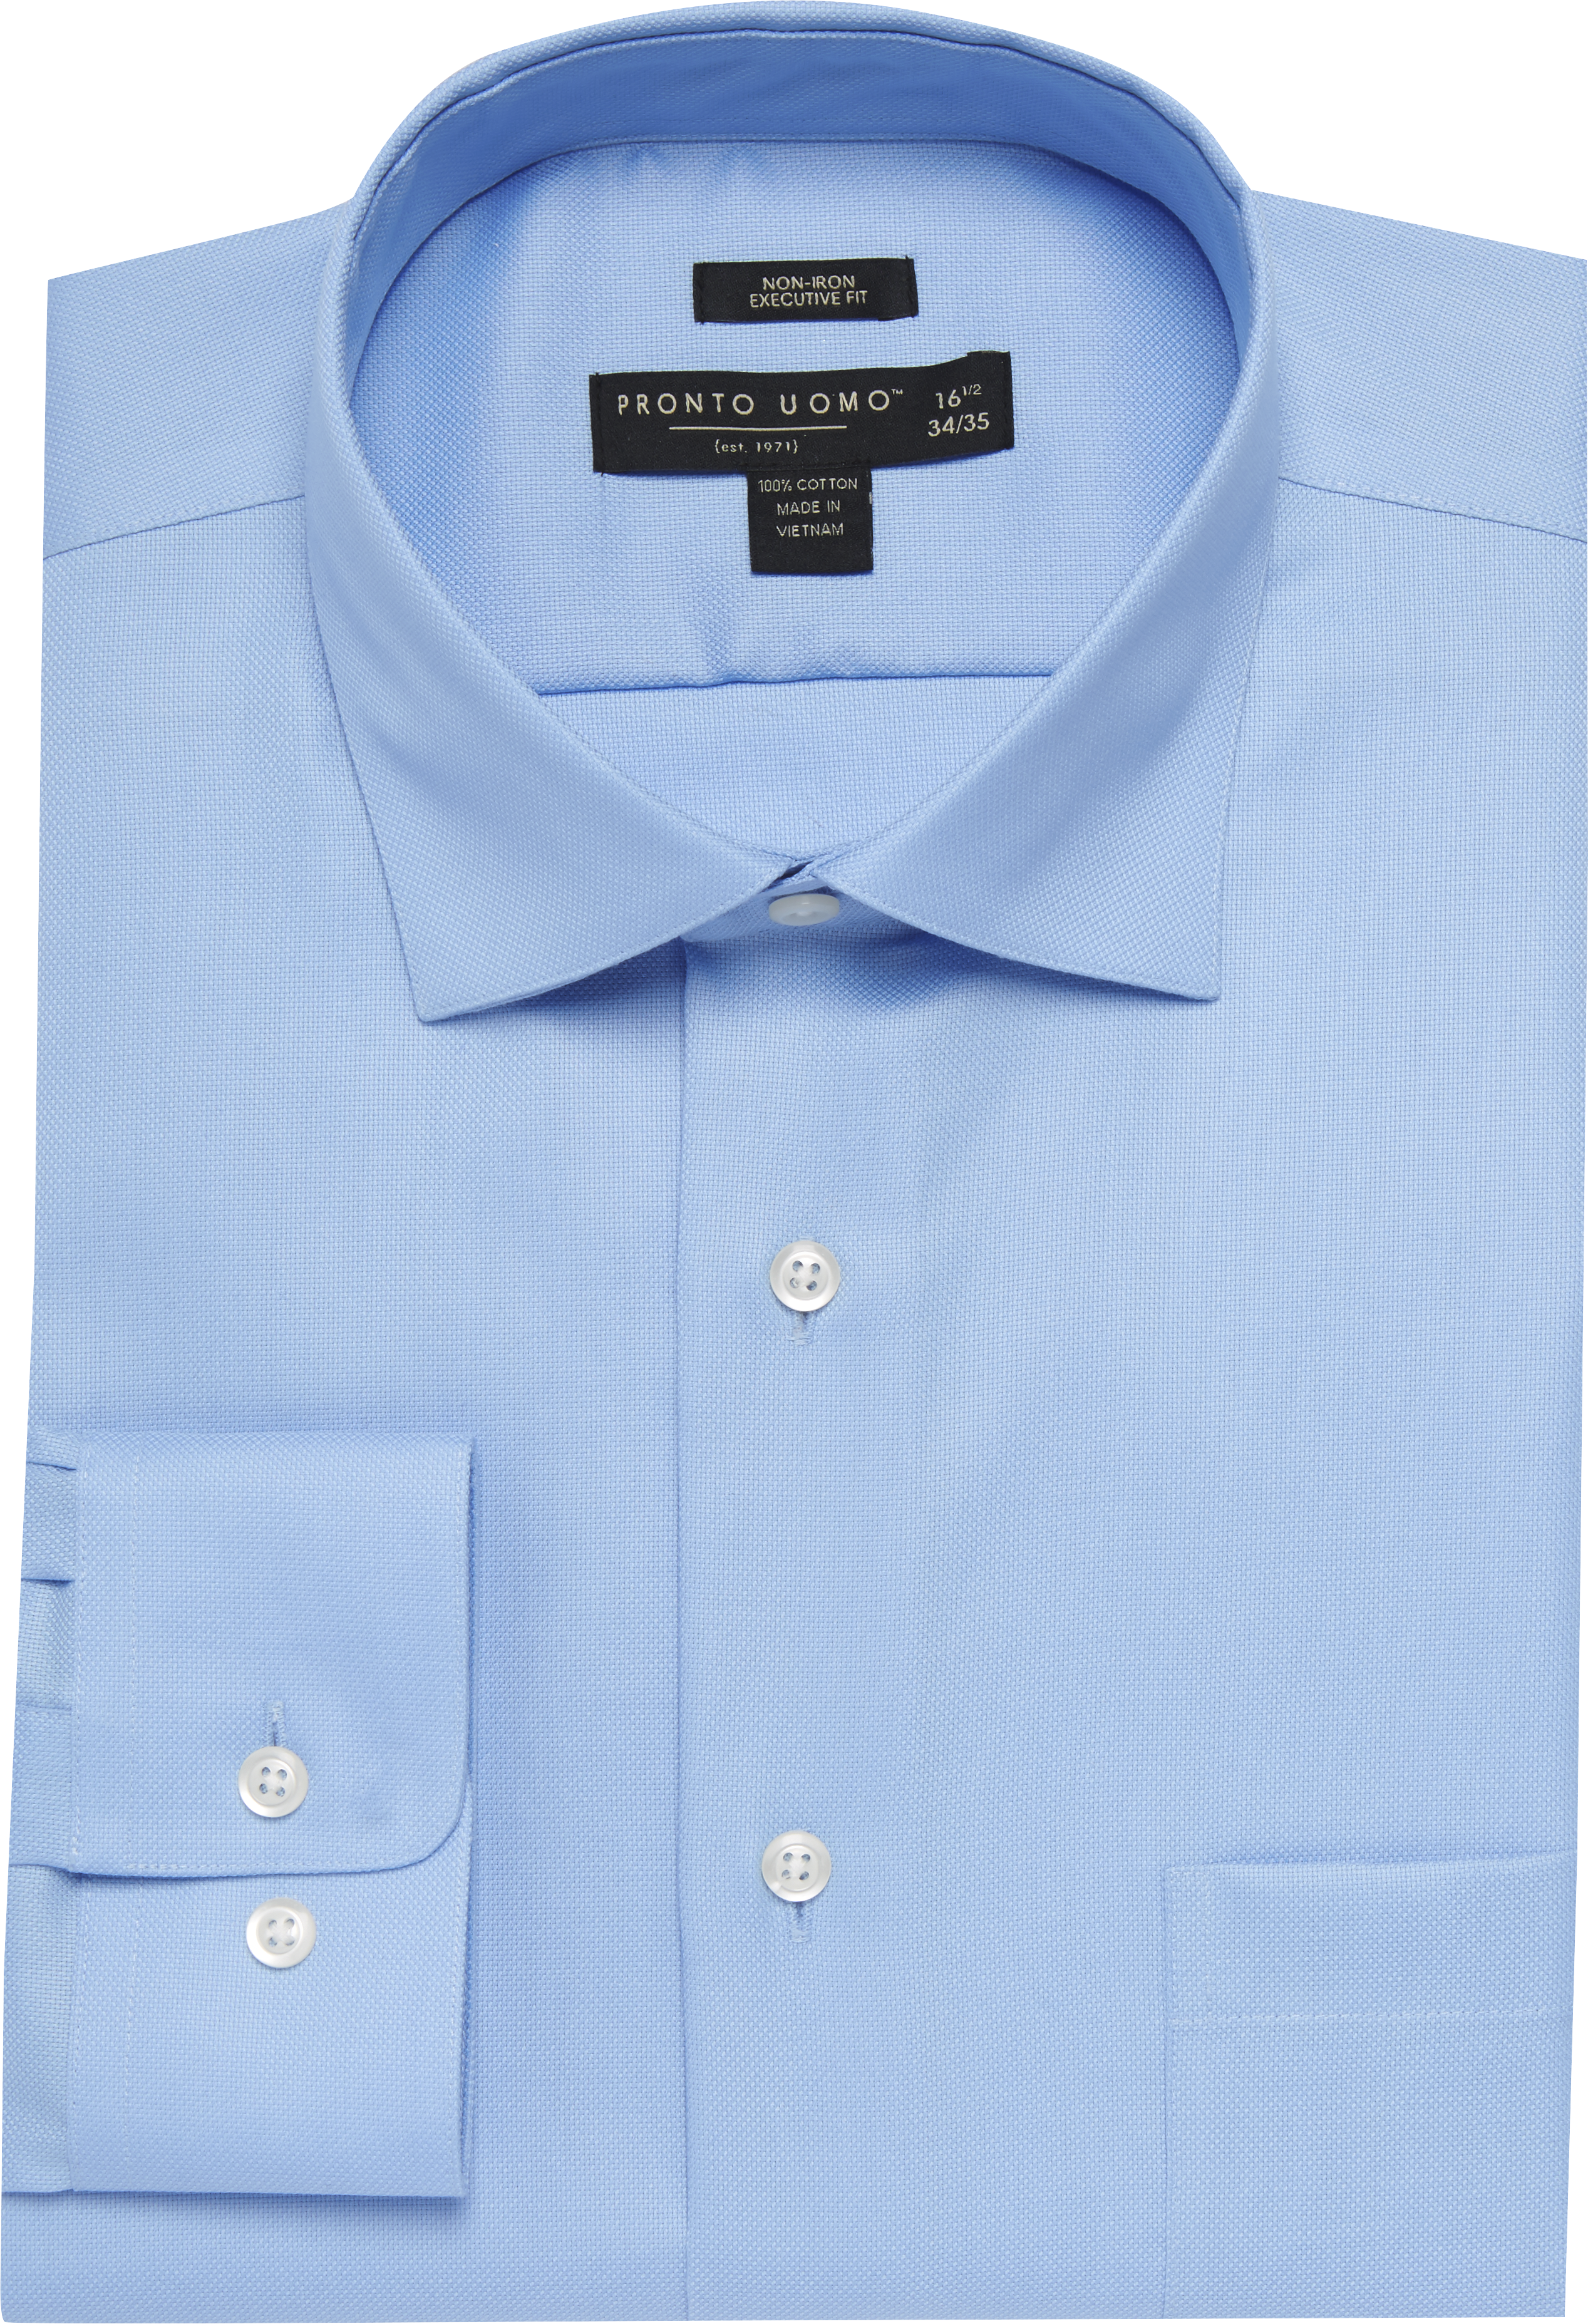 Portly Dress Shirts - Shop Regal Fit Dress Shirts | Men's Wearhouse